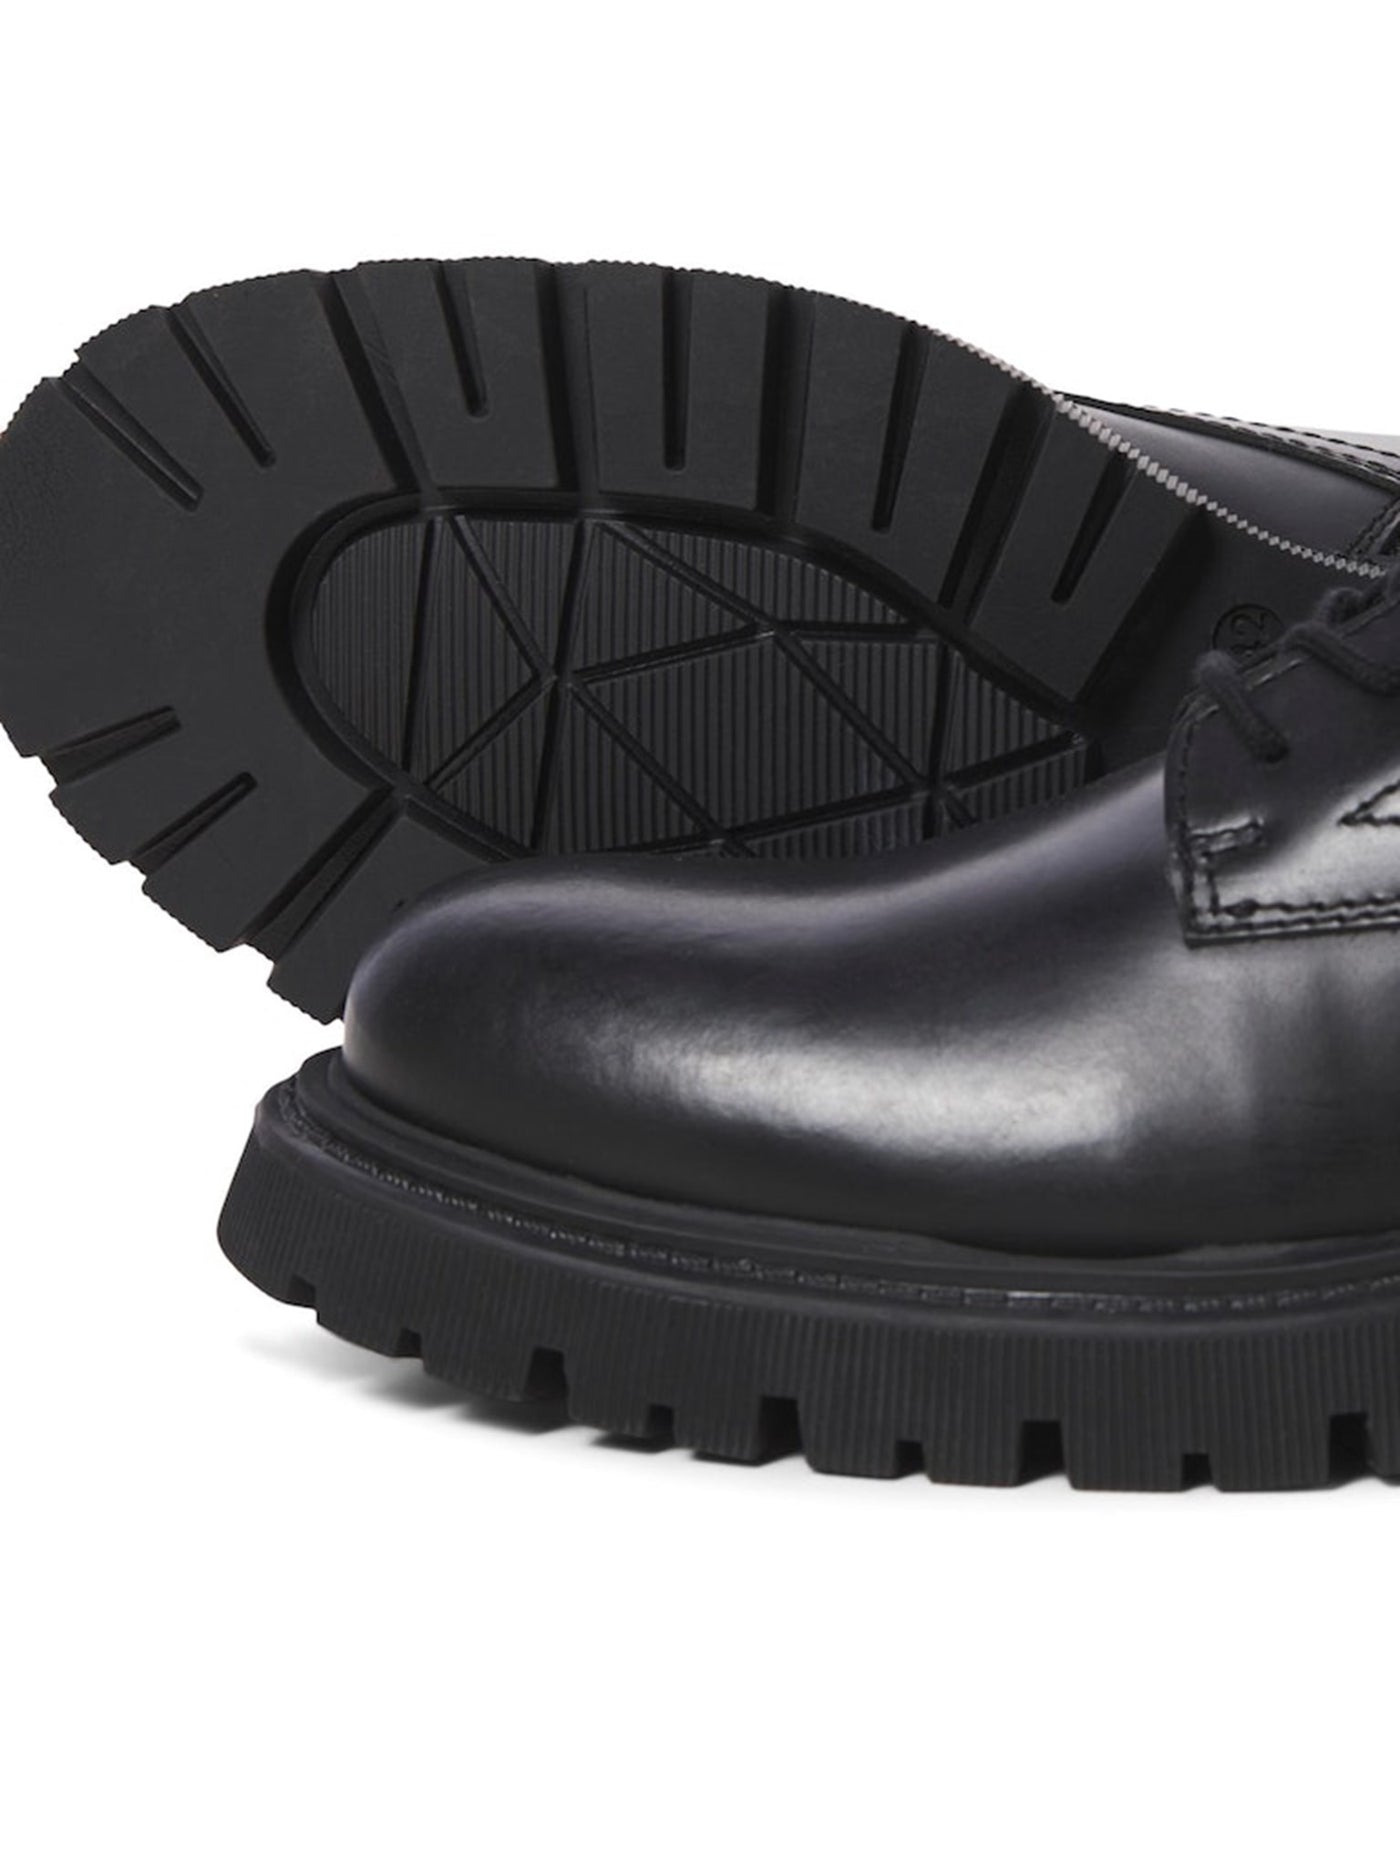 Dixon Leather Boots - Anthracite - Jack & Jones - Sort 4